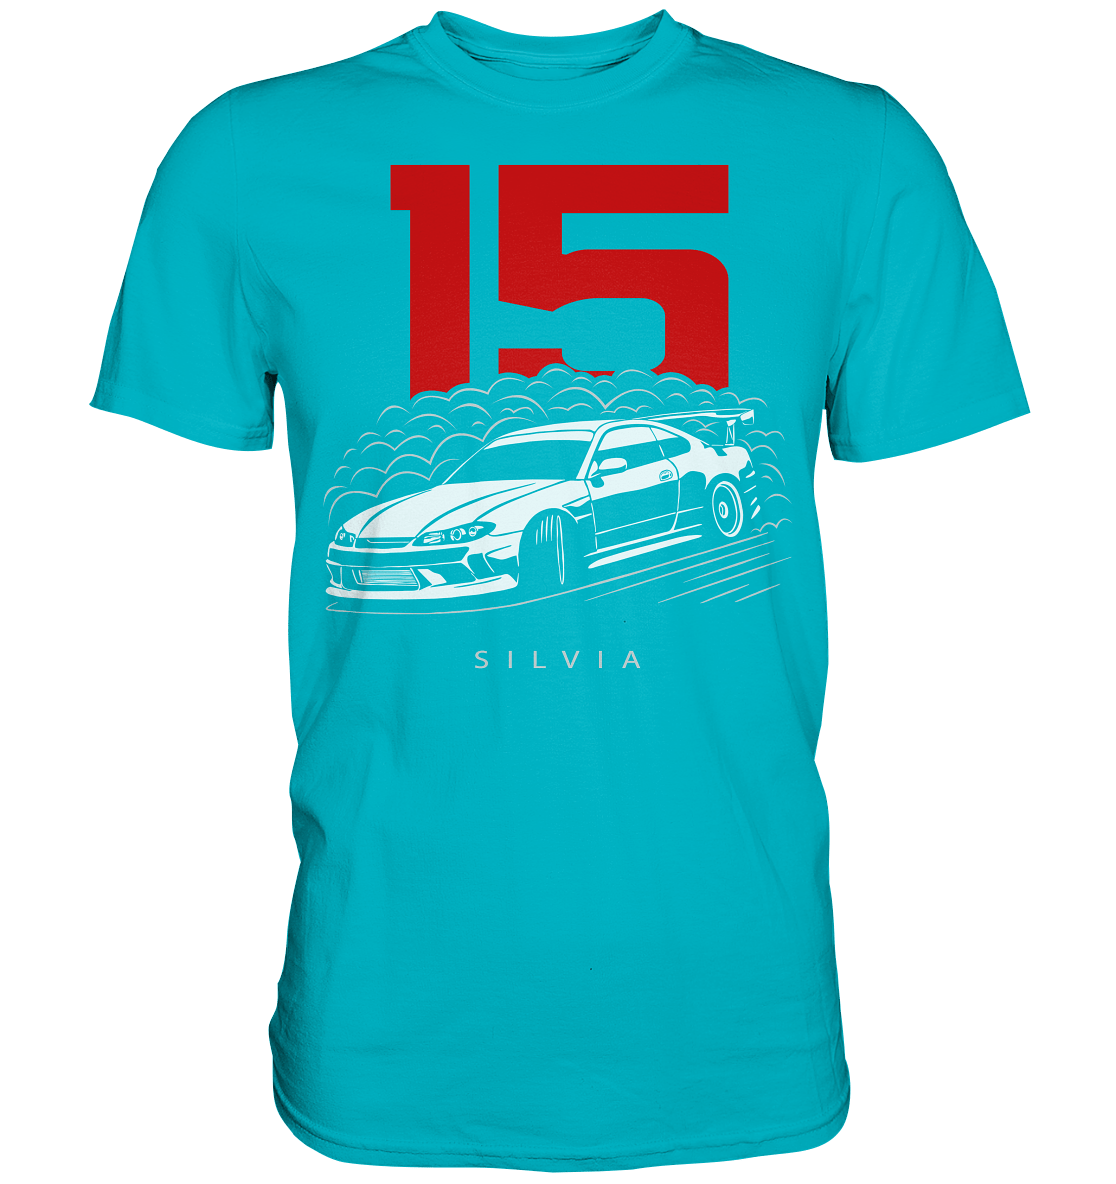 Silvia S15 - Premium Shirt - MotoMerch.de